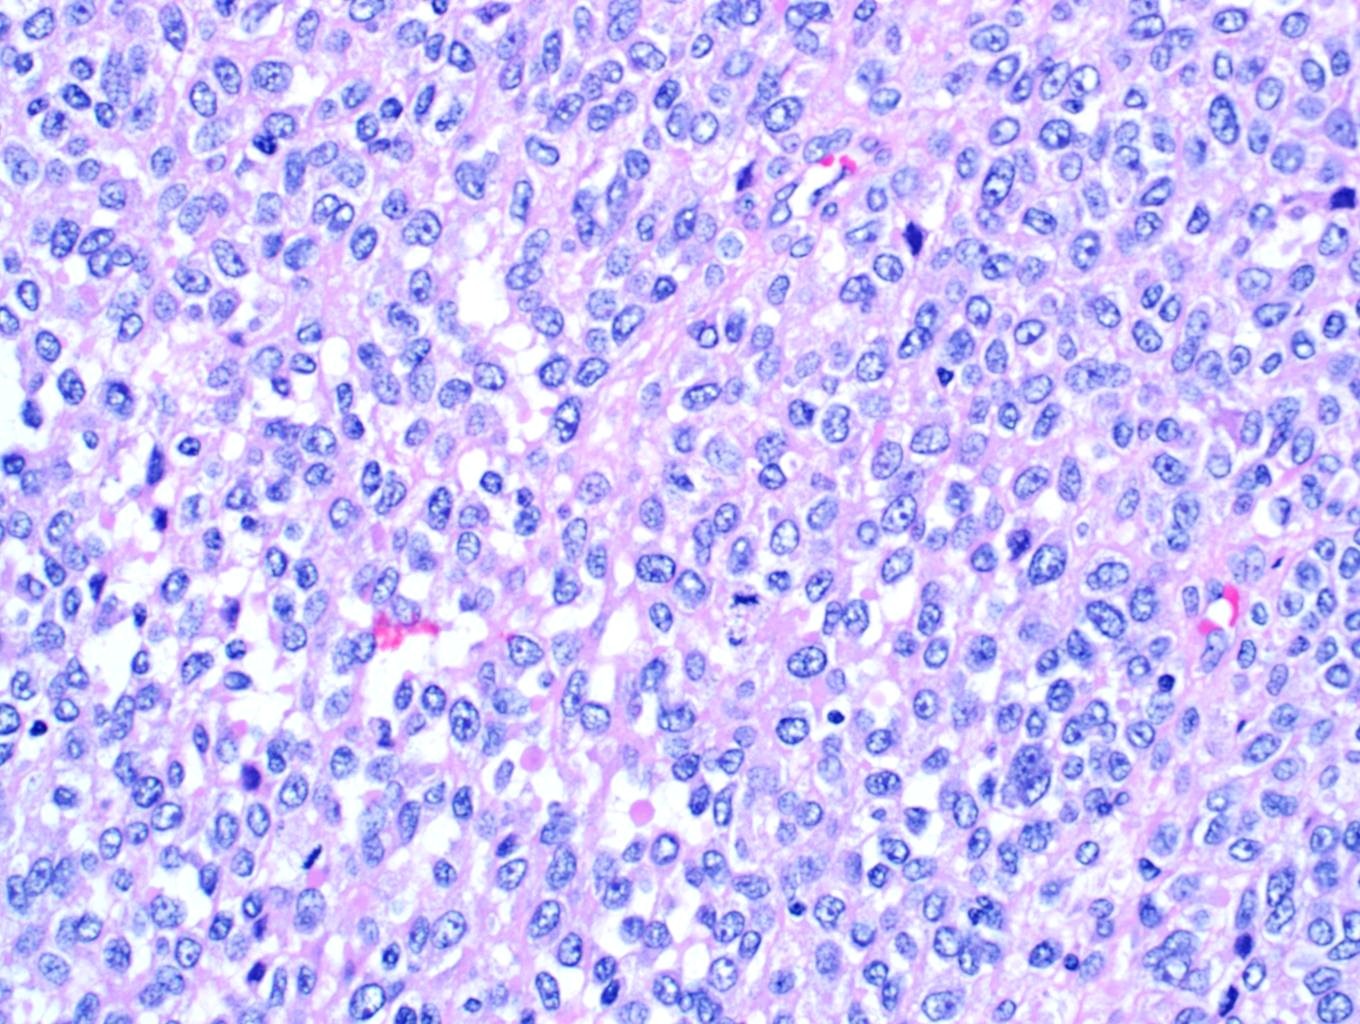 Pathology Outlines - Glomus tumor